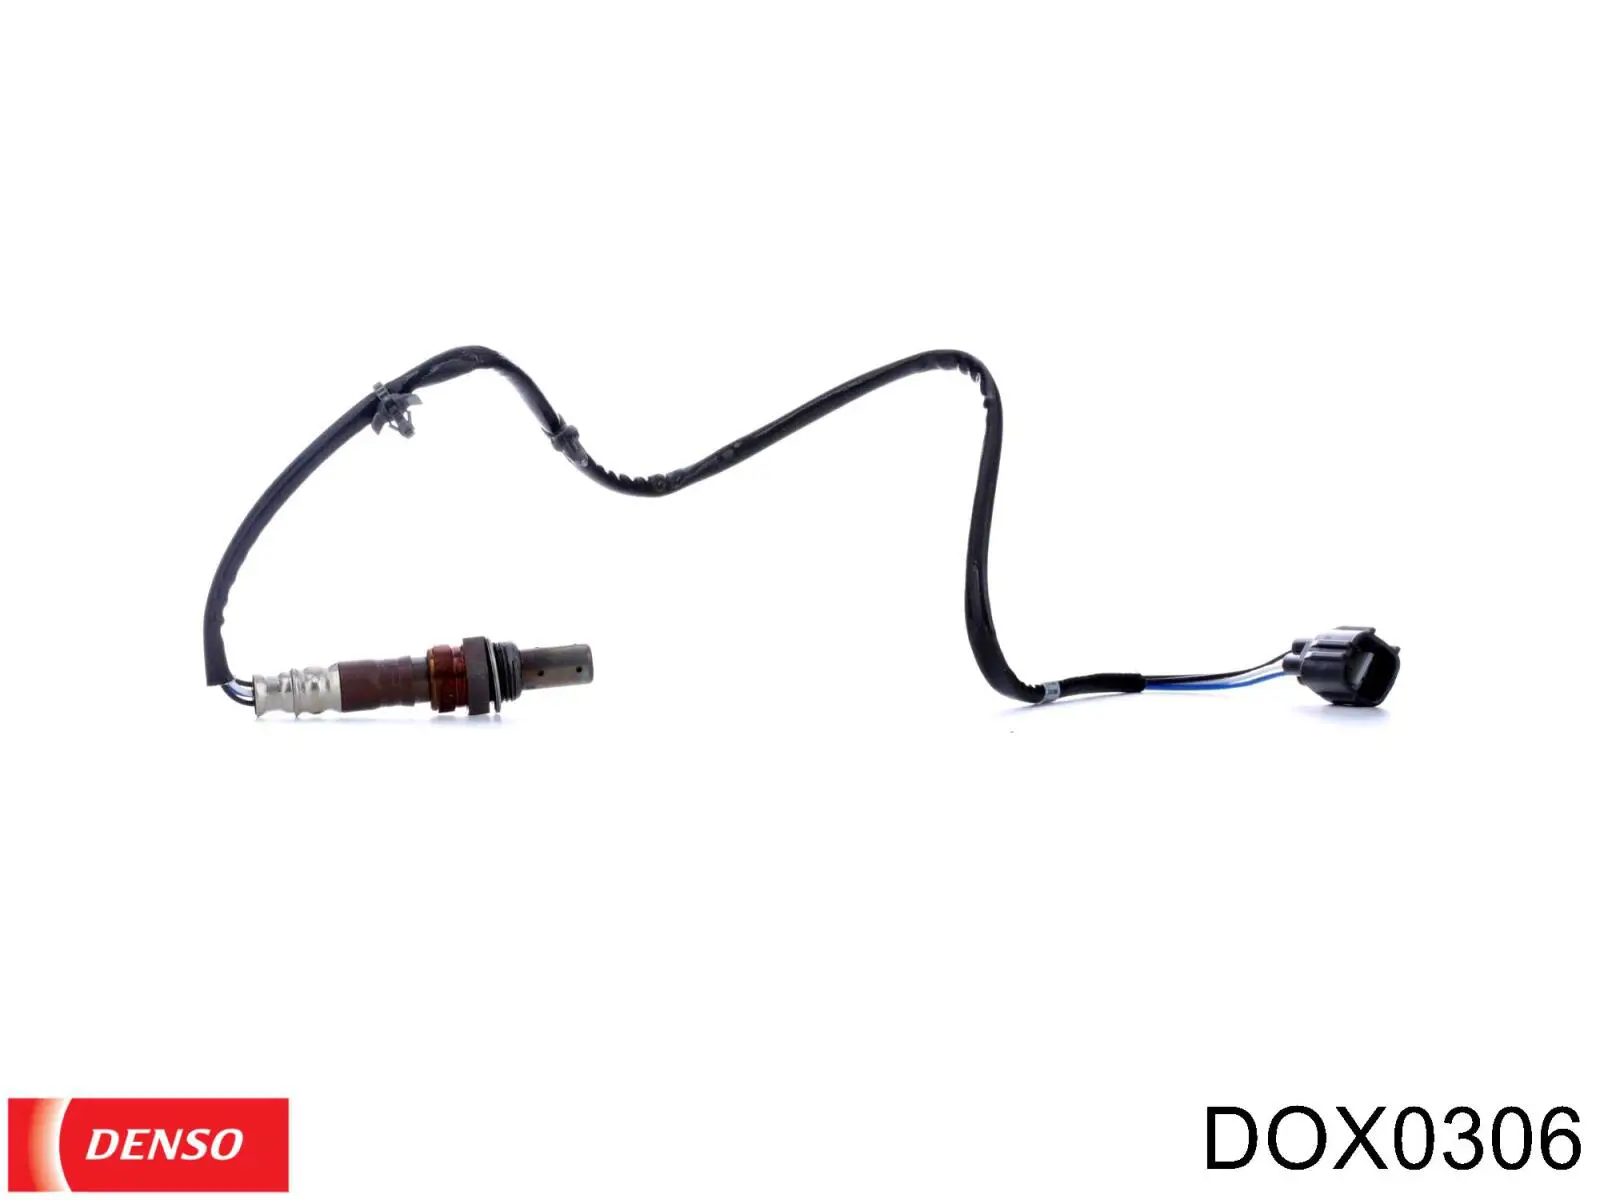 DOX0306 Denso sonda lambda sensor de oxigeno para catalizador